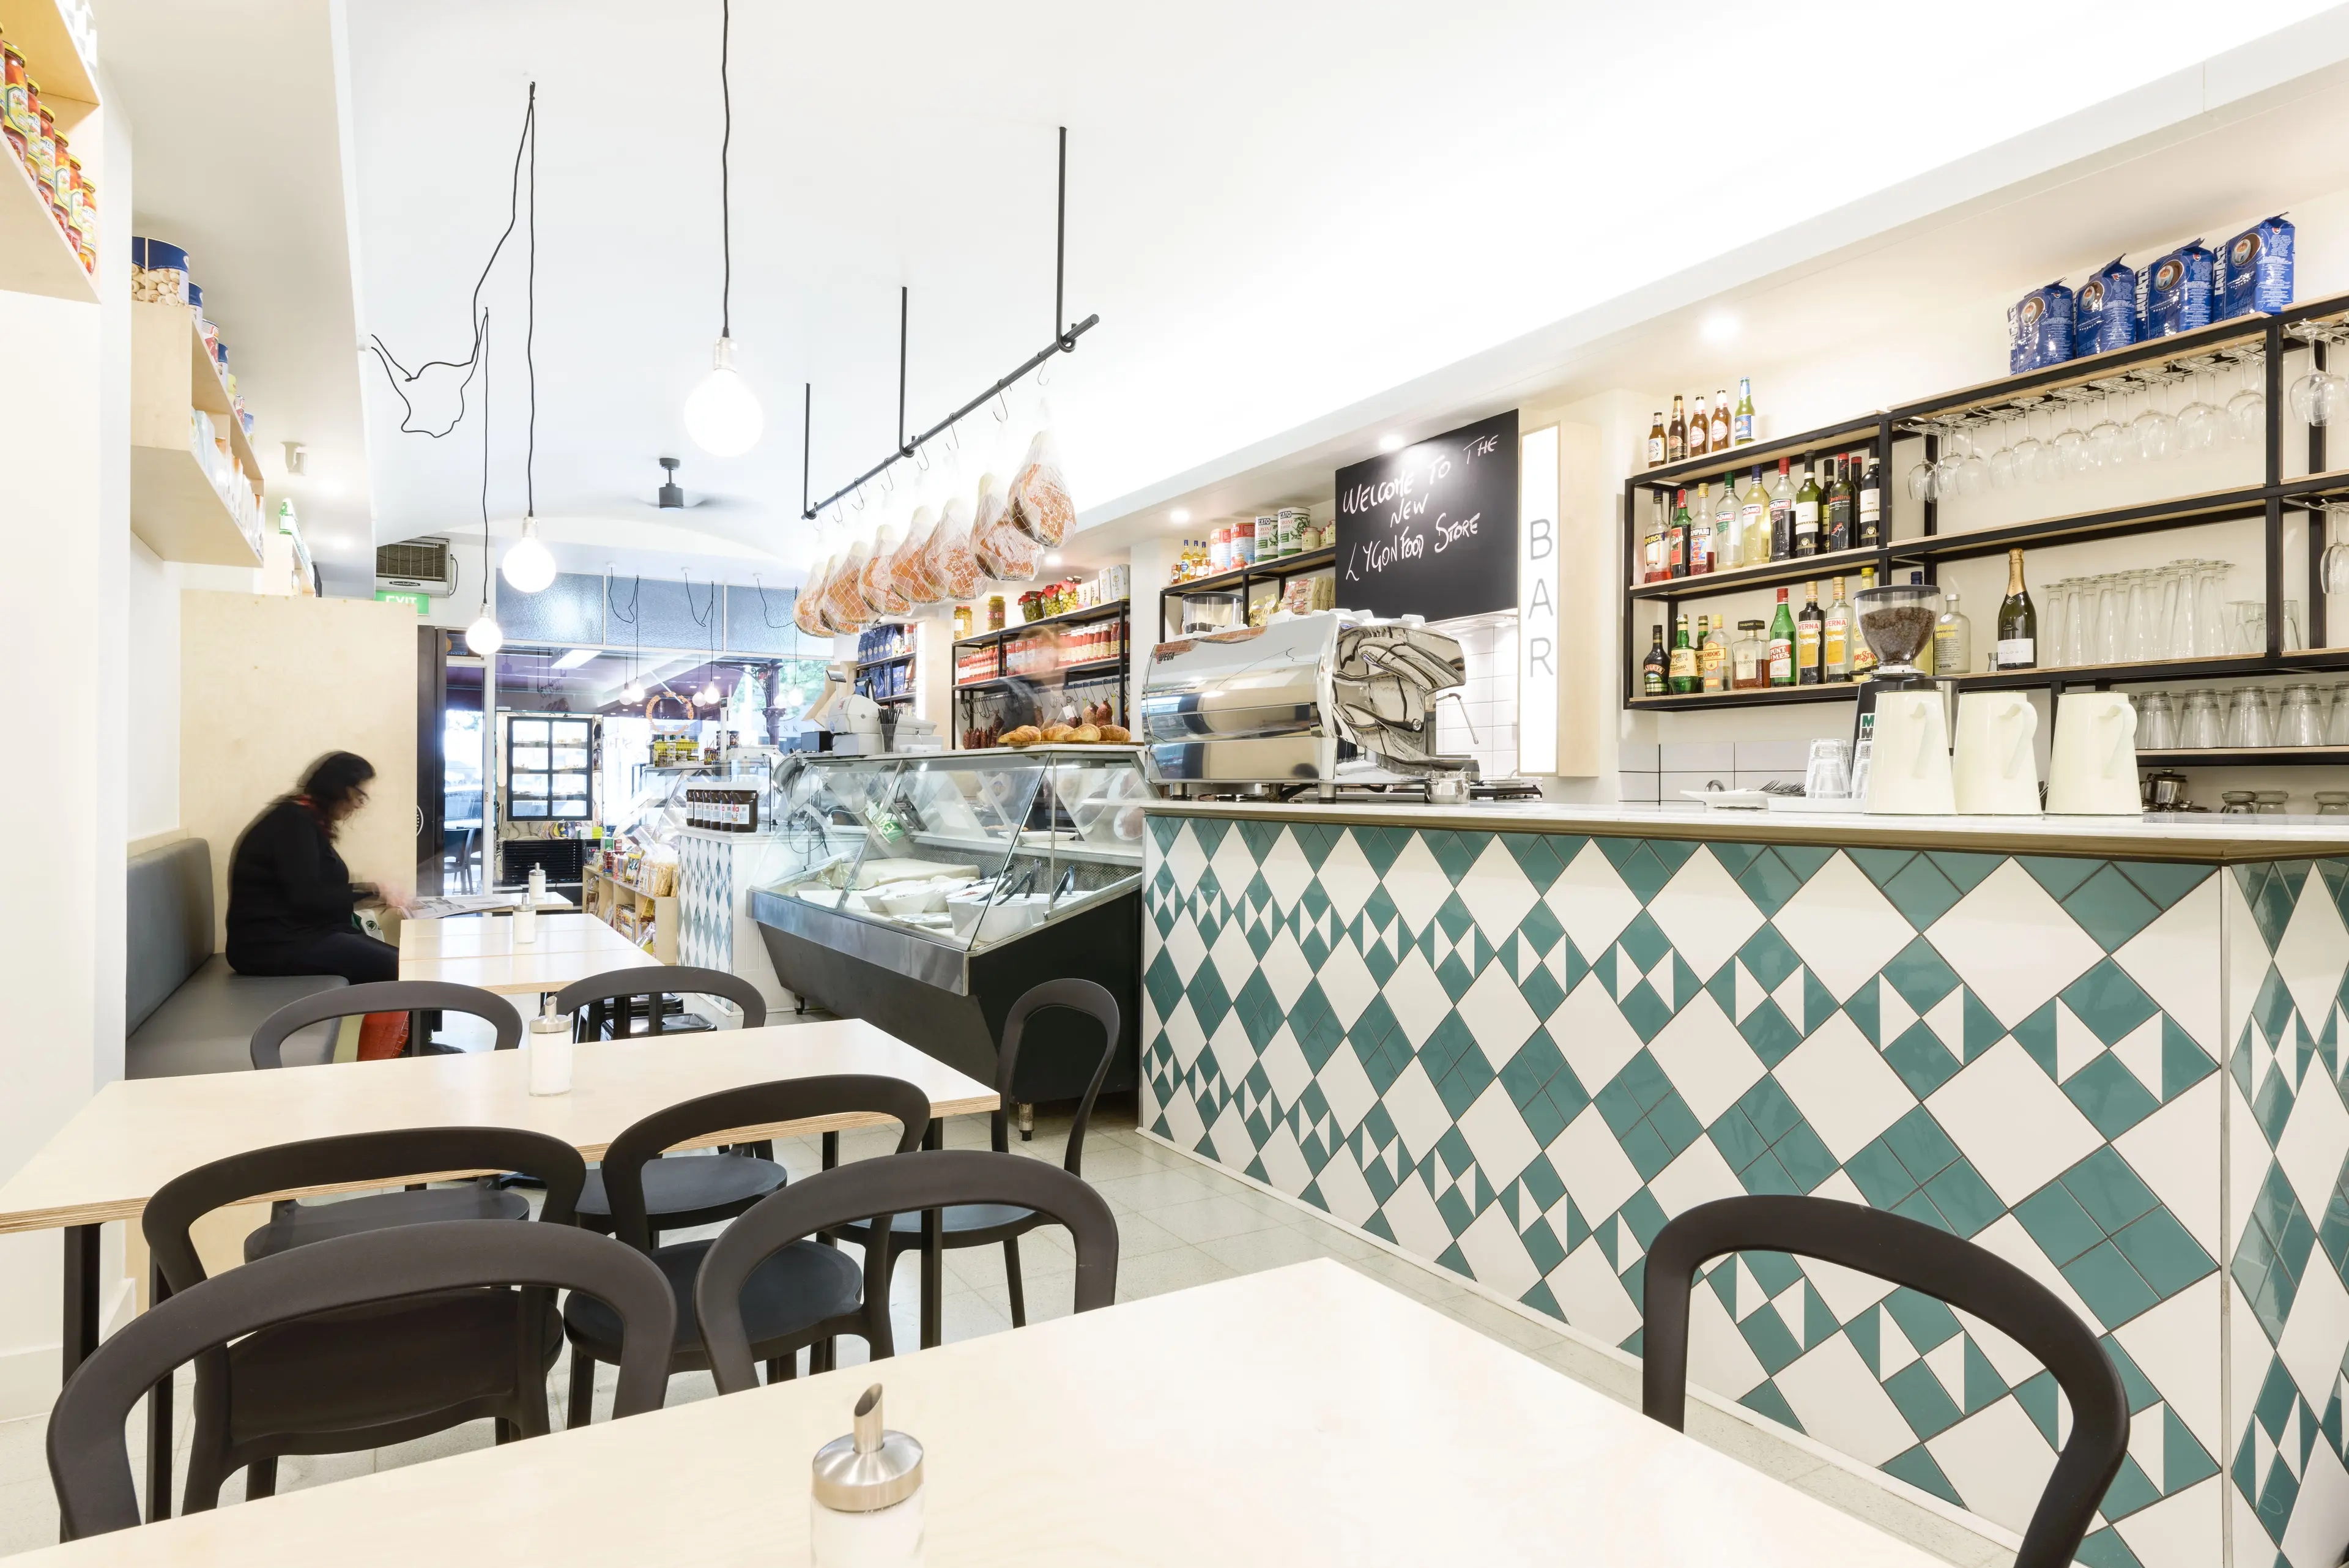 Lygon Food Store - hospitality interior design, fabrication and fitout - Lygon St, Carlton, Melbourne, Australia